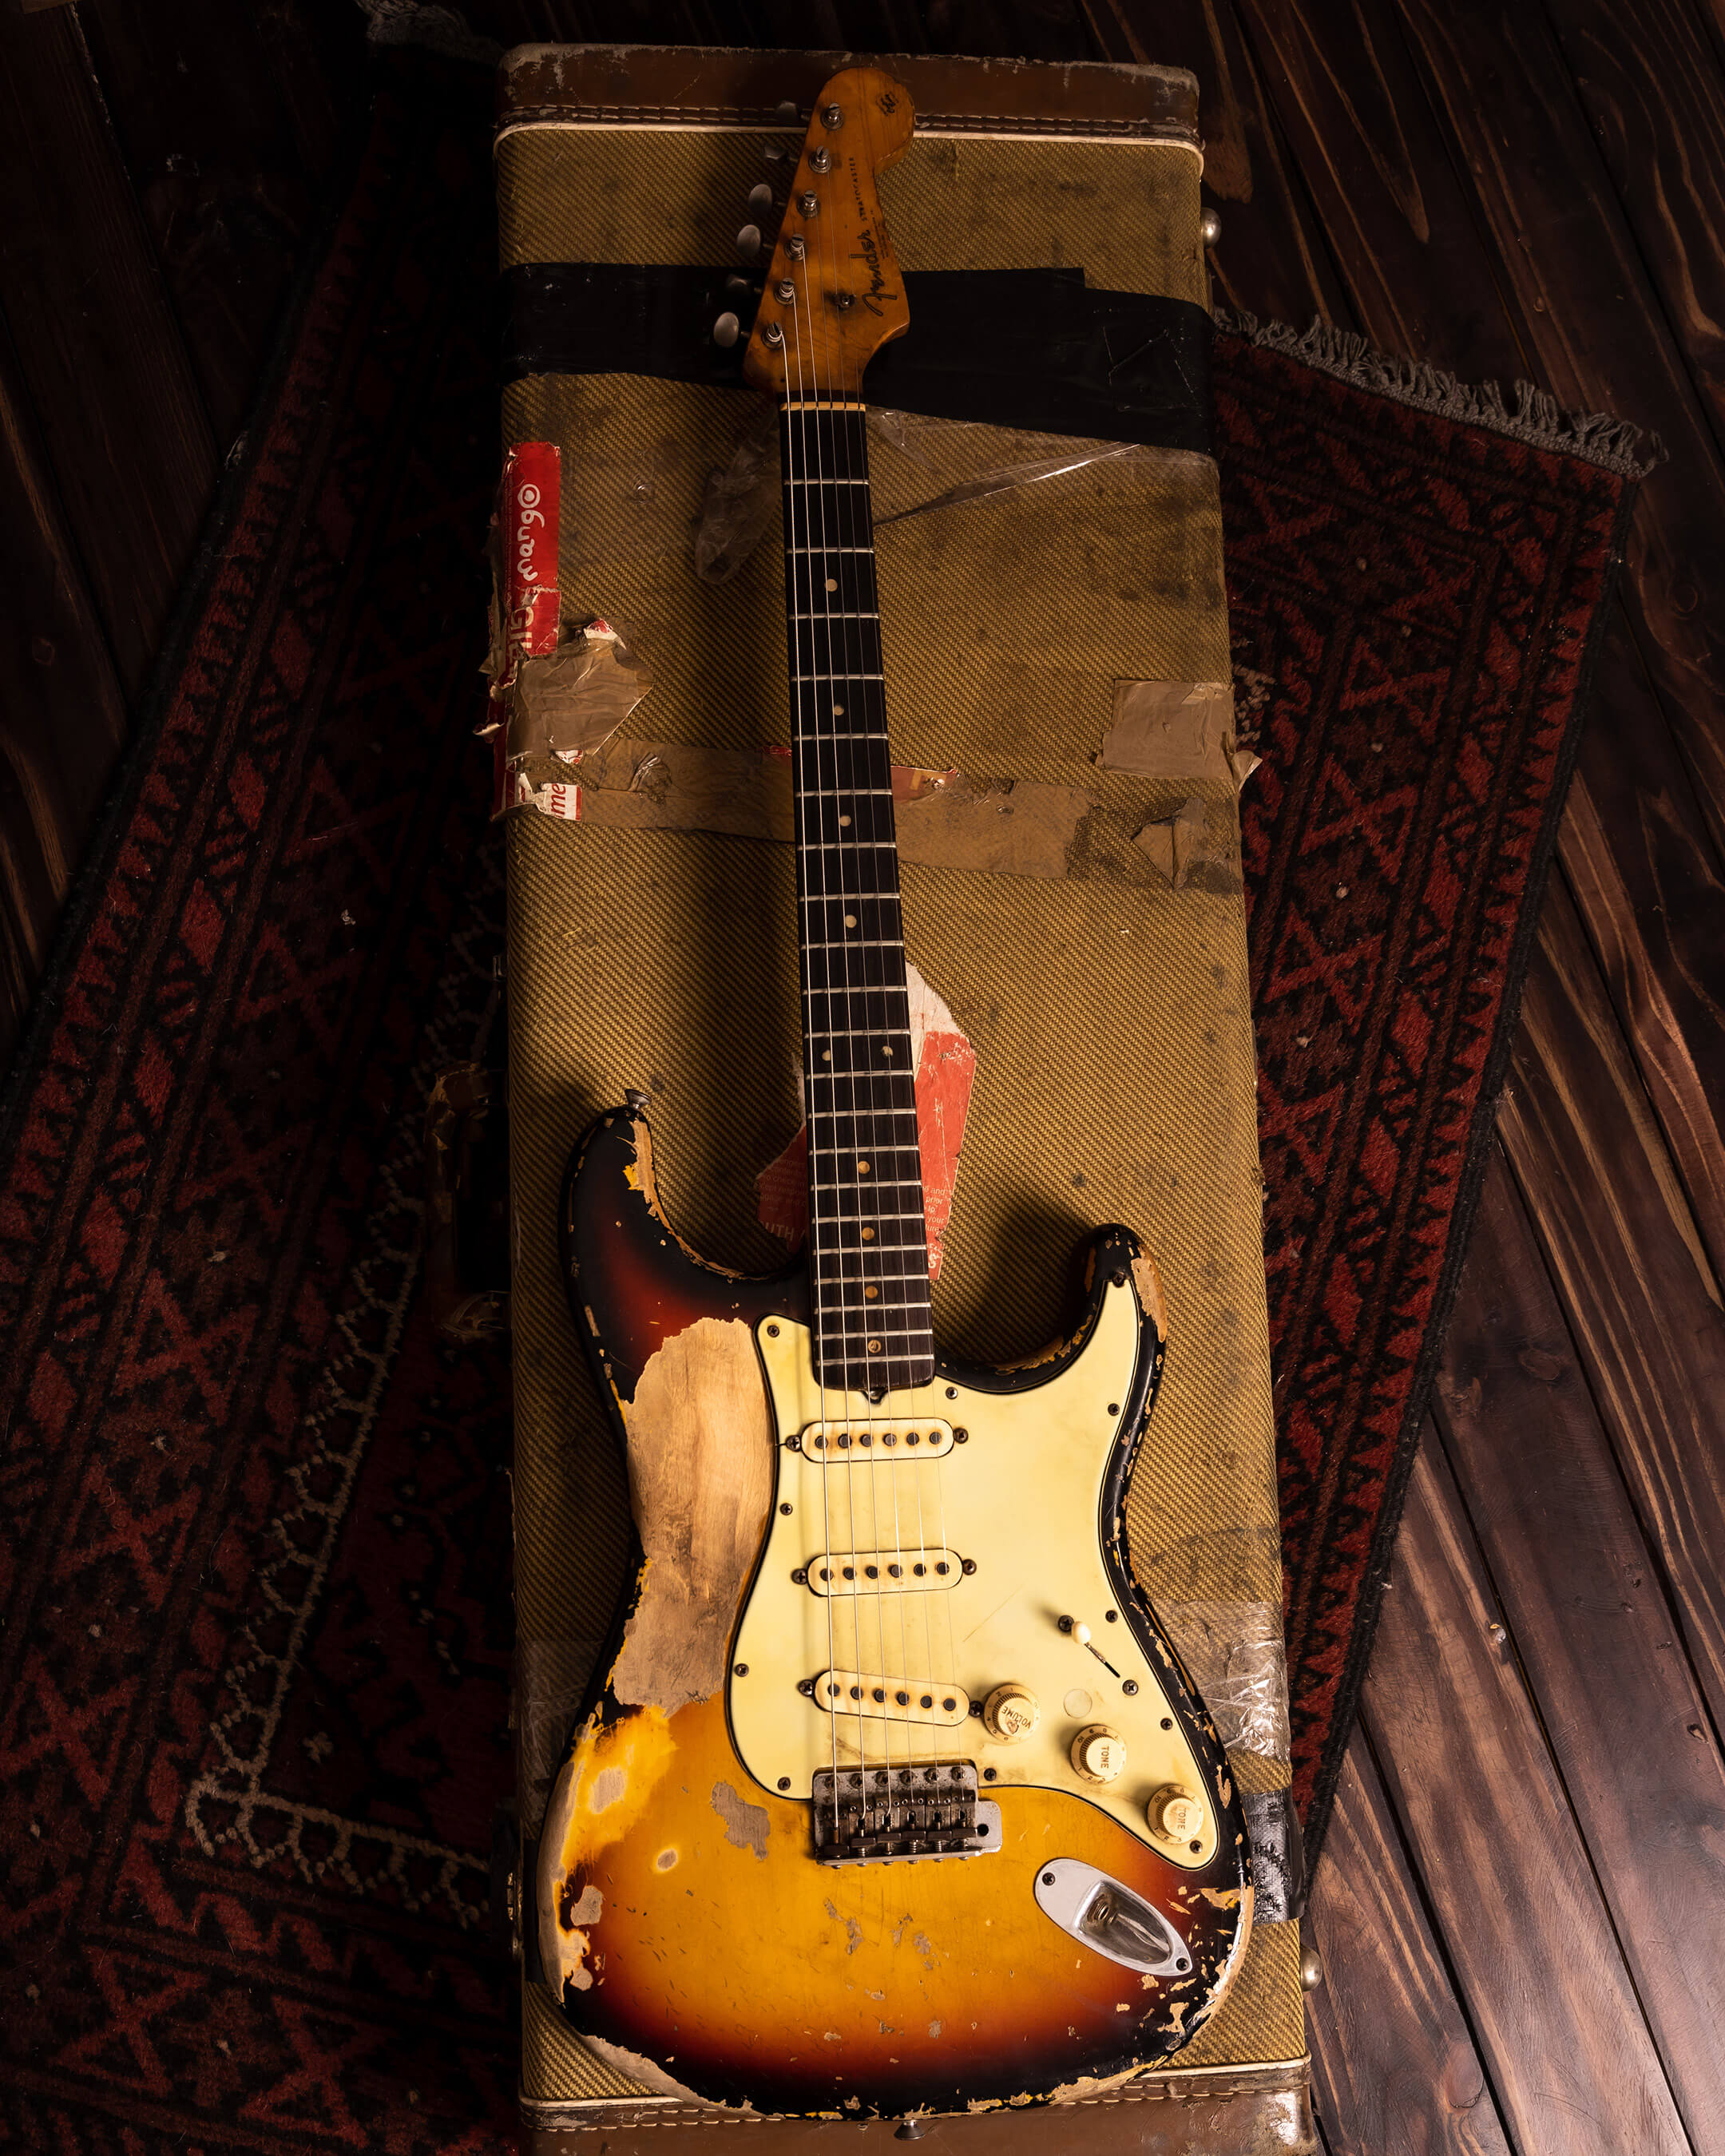 丹·帕特兰斯基（Dan Patlansky）的Stratocaster